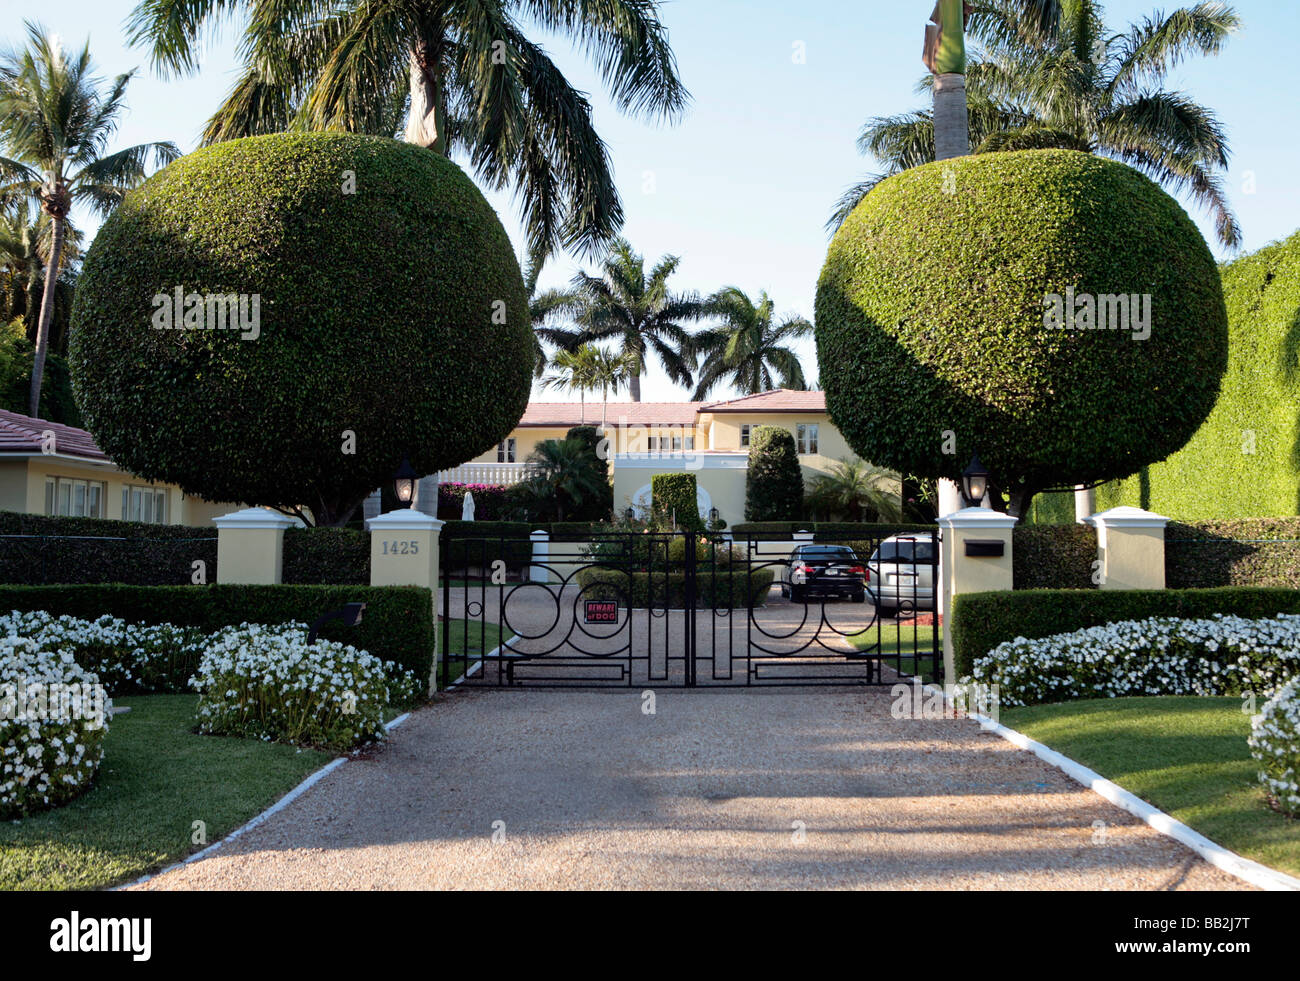 Entrance to a luxury home, Sunset Island, Miami, Florida. Stock Photo